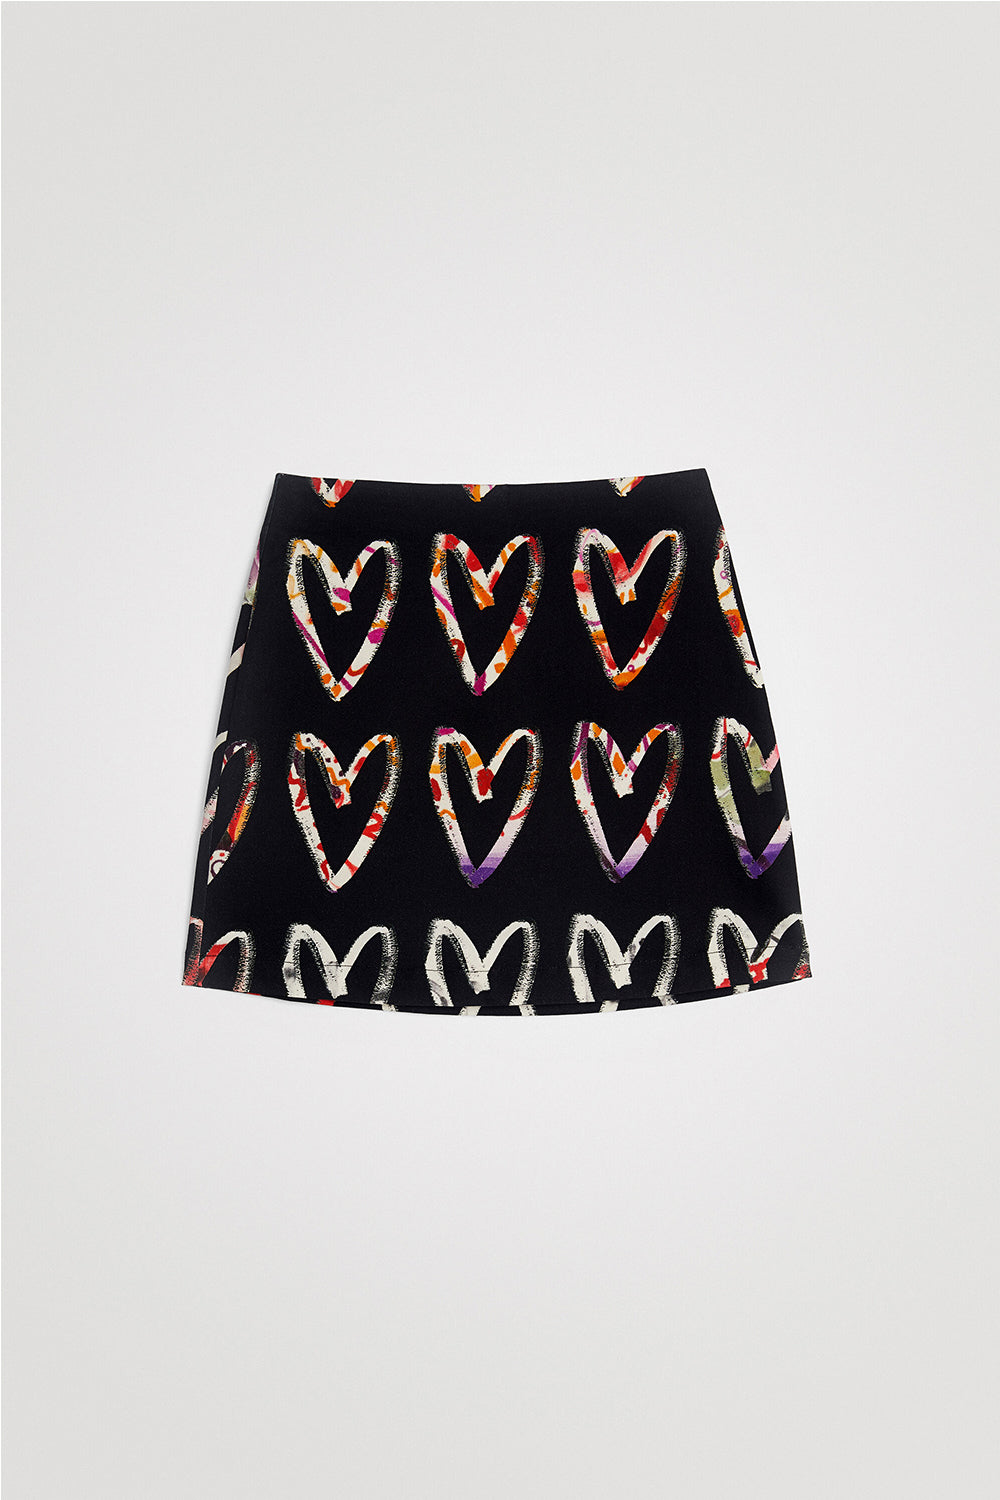 Desigual / Mini Skirt Hearts Print / Noir